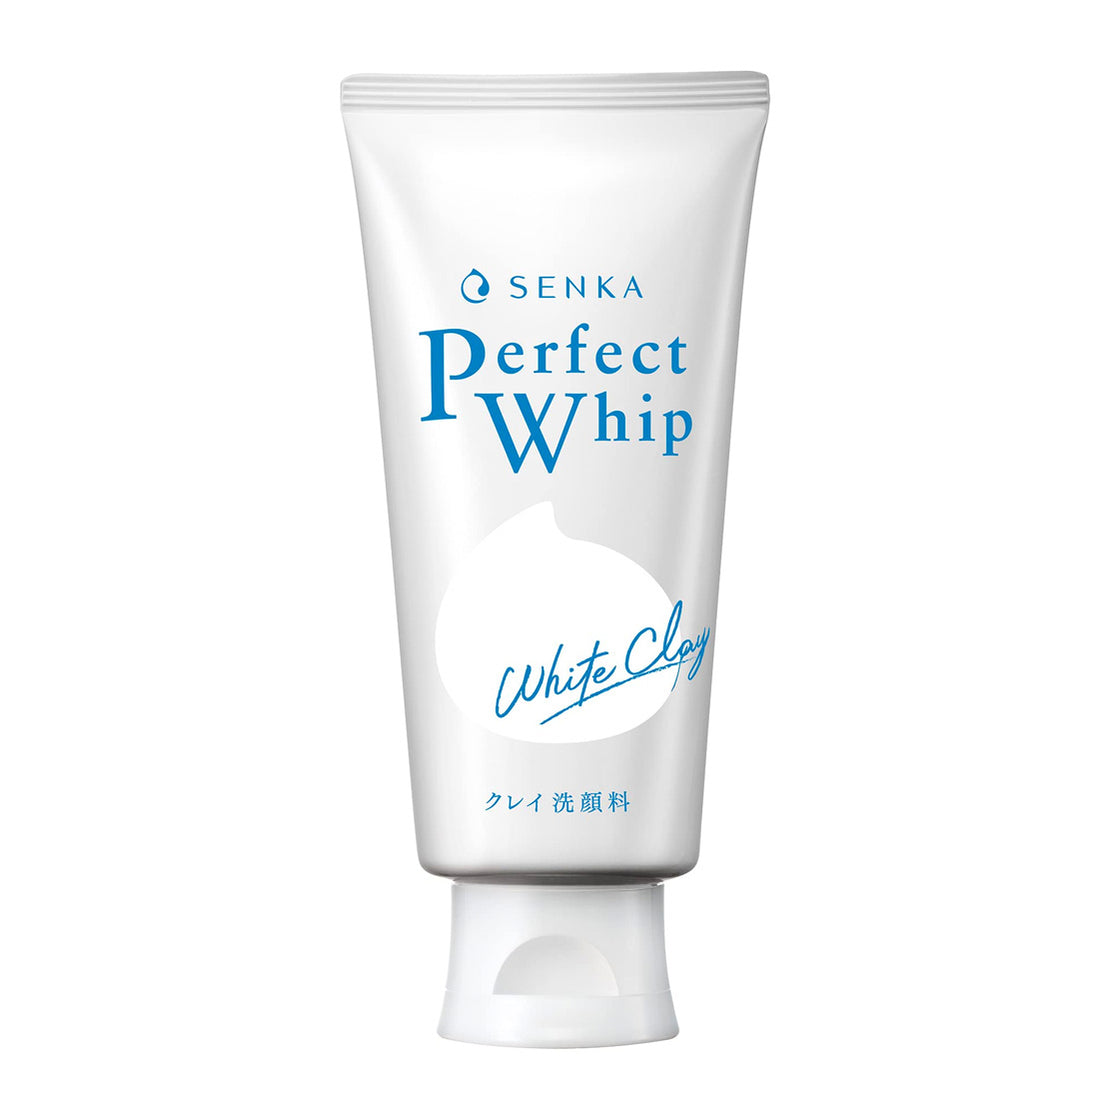 Shiseido - Senka Perfect Whip White Clay Face Wash